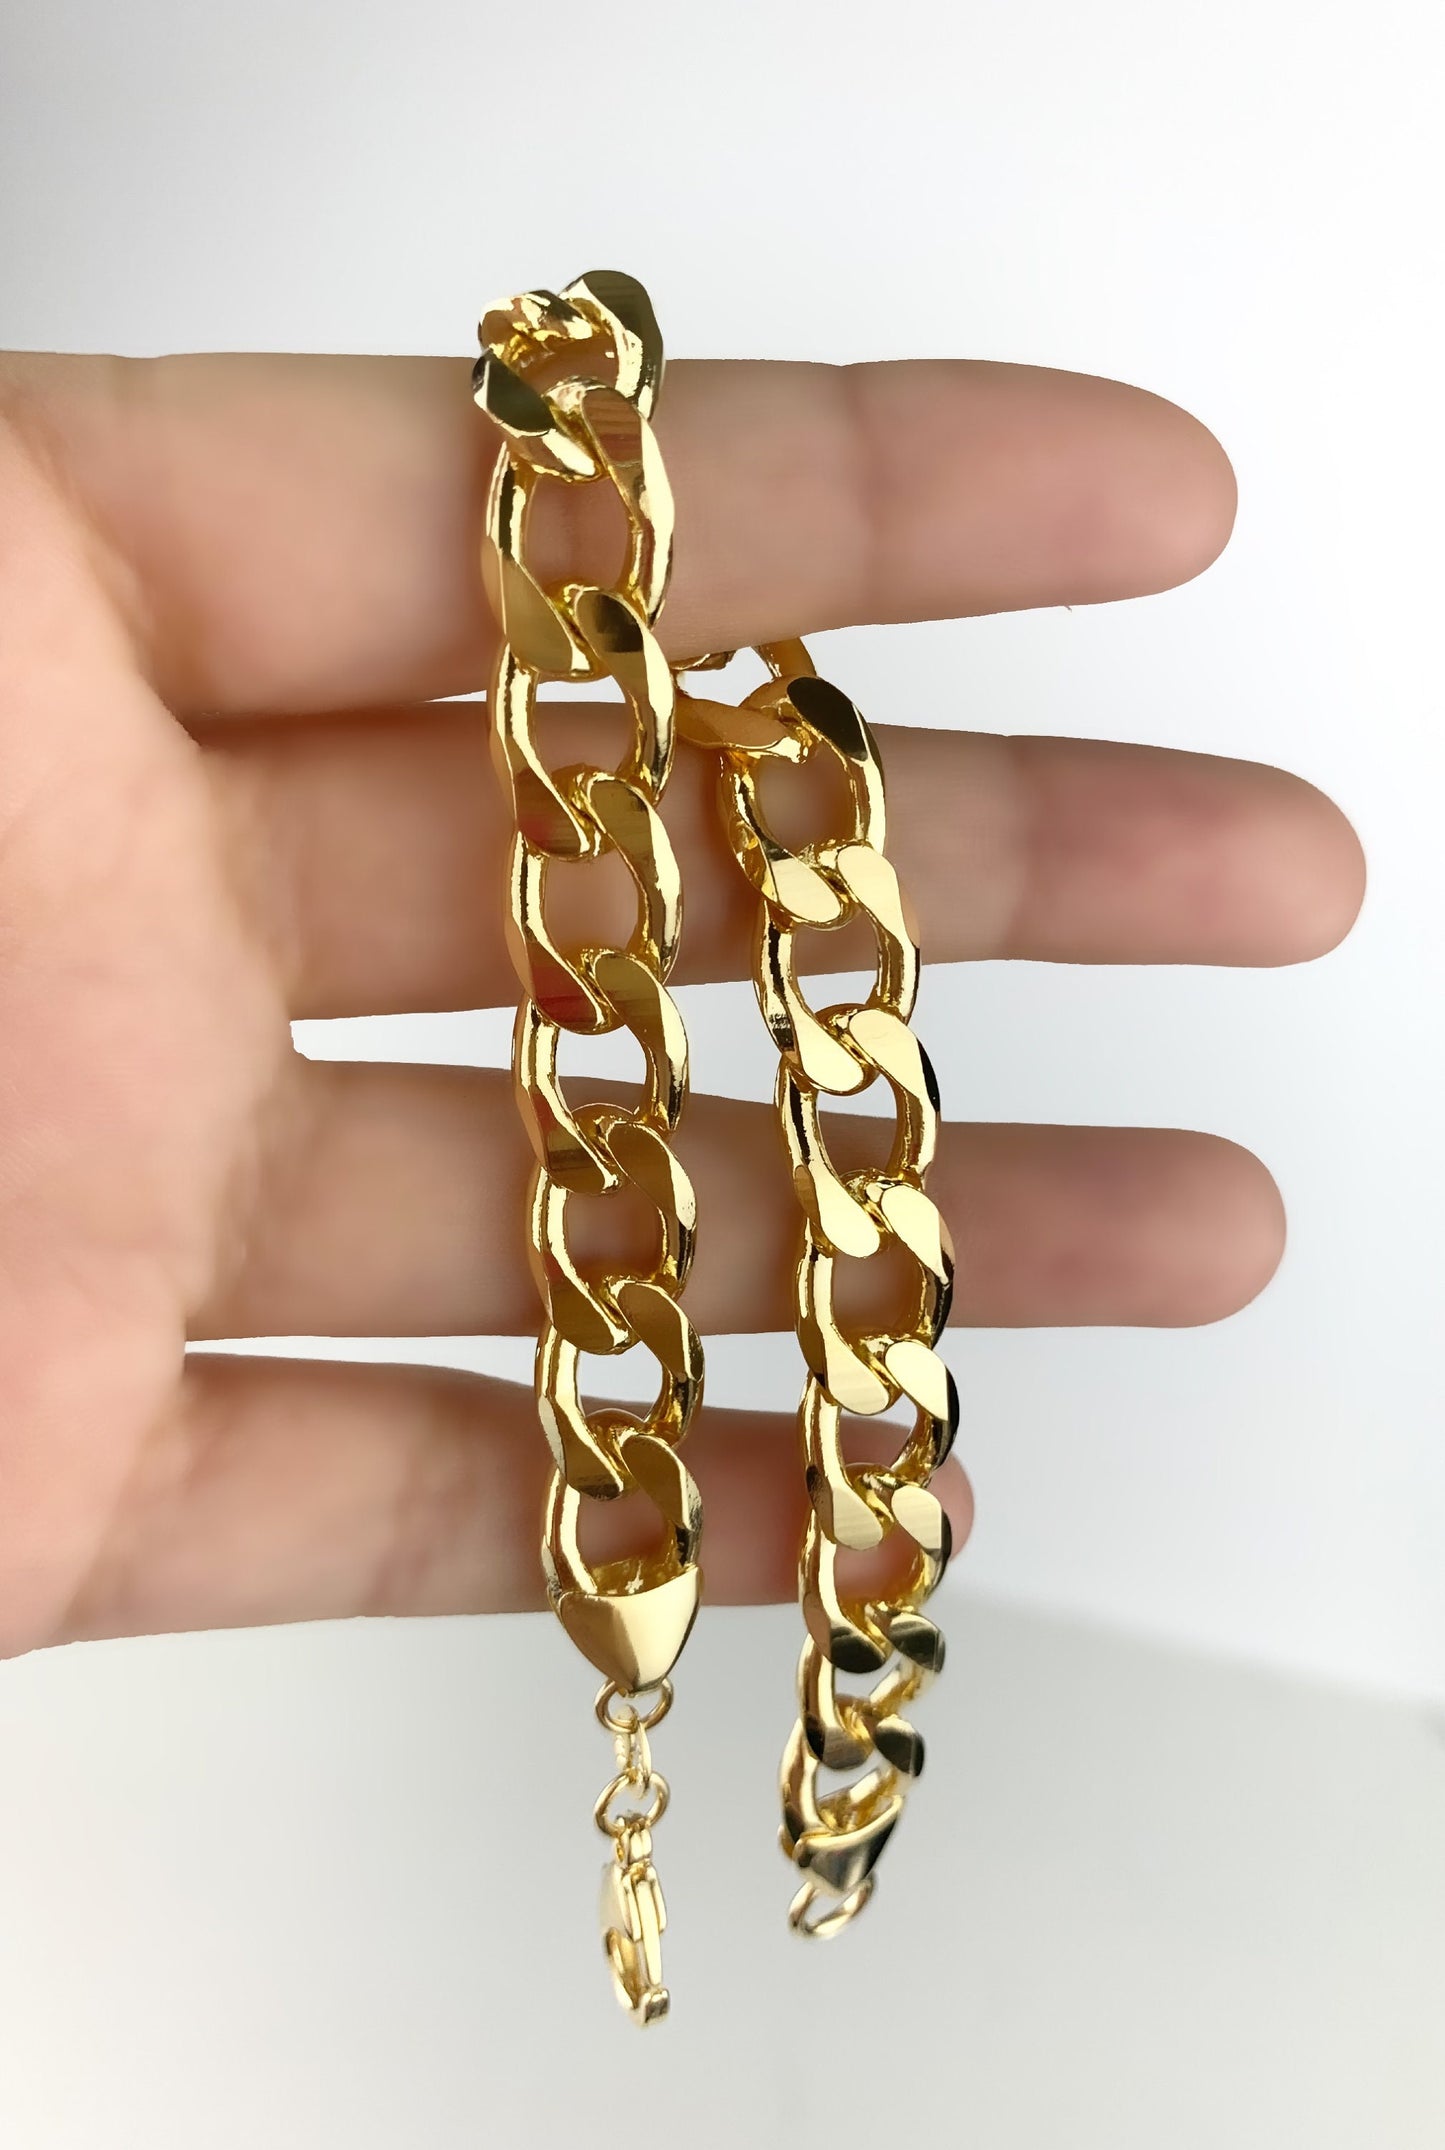 18k Gold Filled For Men Cuban Link Bracelet Wholesale Jewelry Supplies